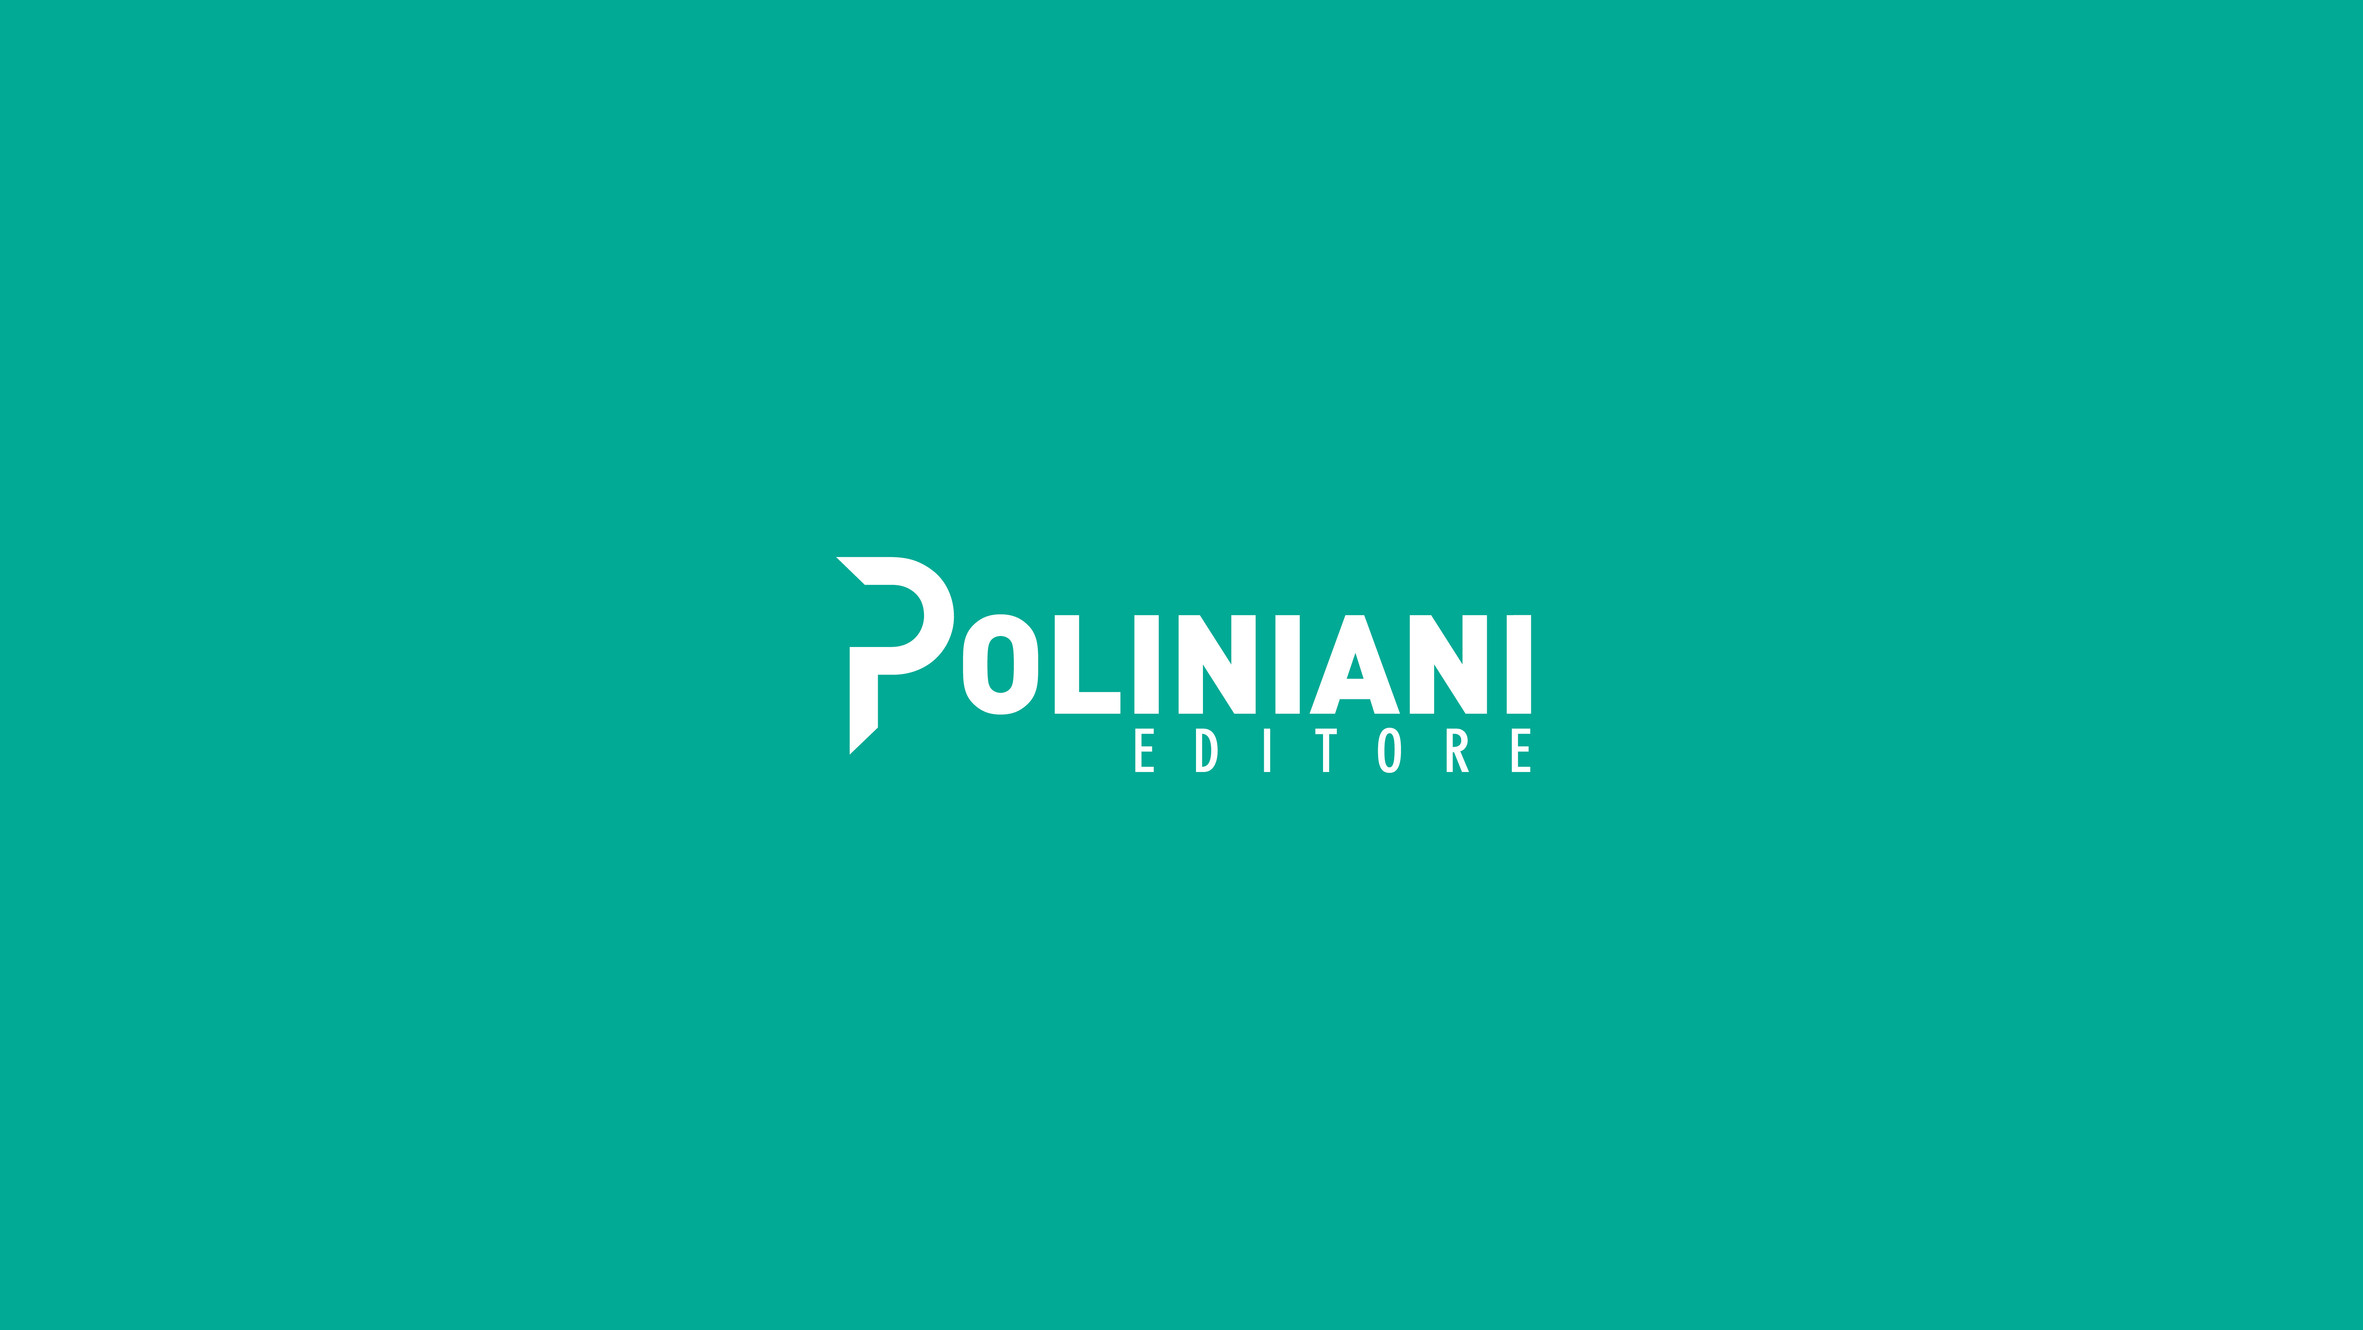 Poliniani Editore alla Milan Games Week & Cartoomics 2022